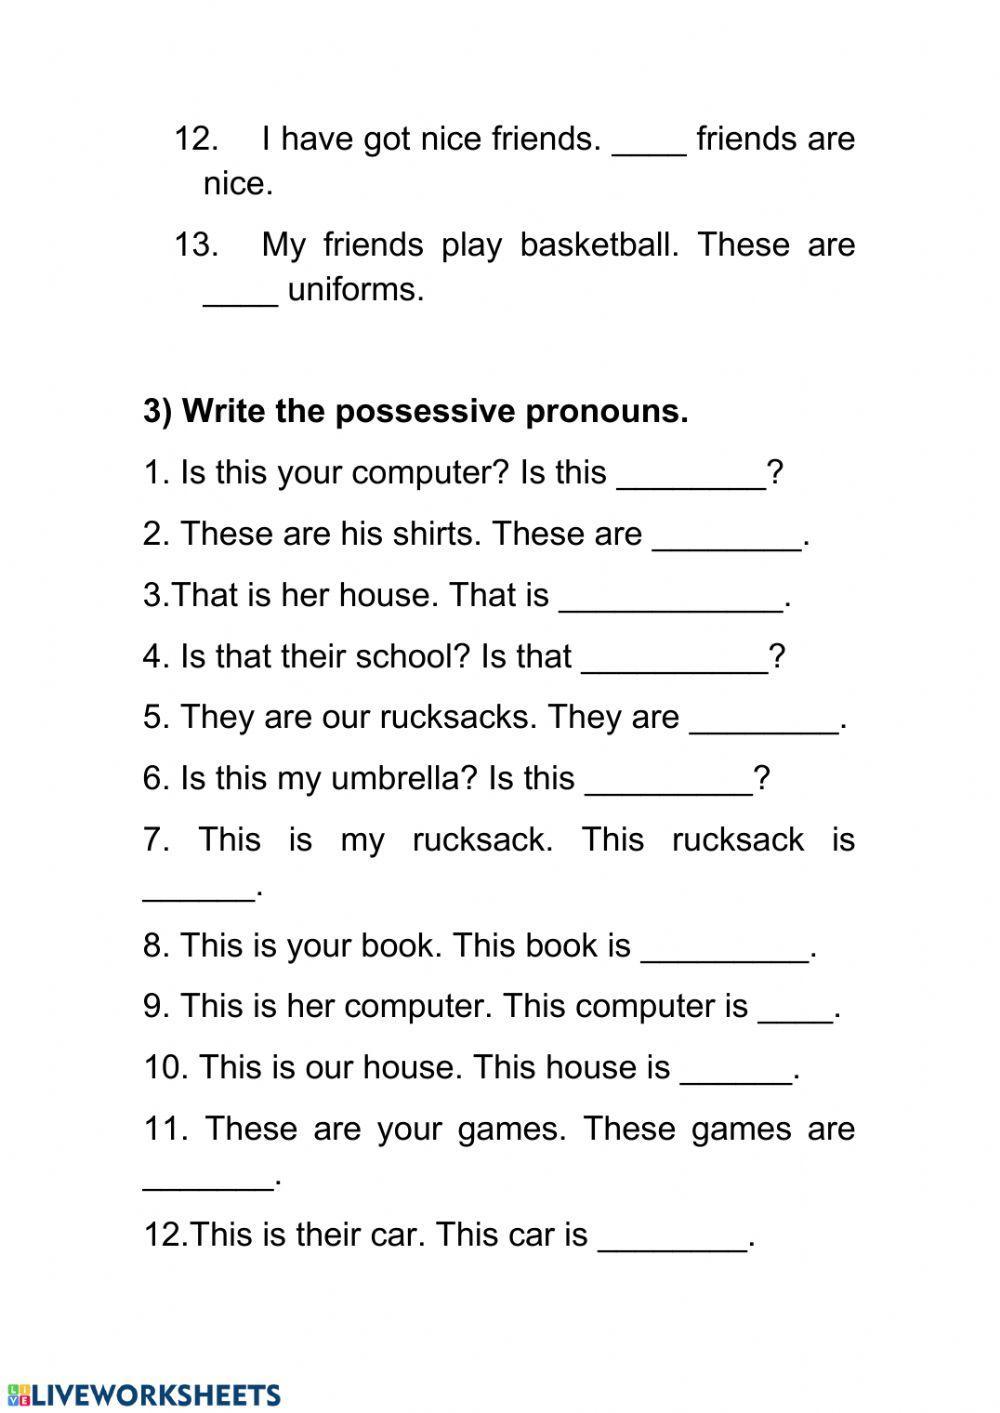 Possessive Adjectives and Pronouns